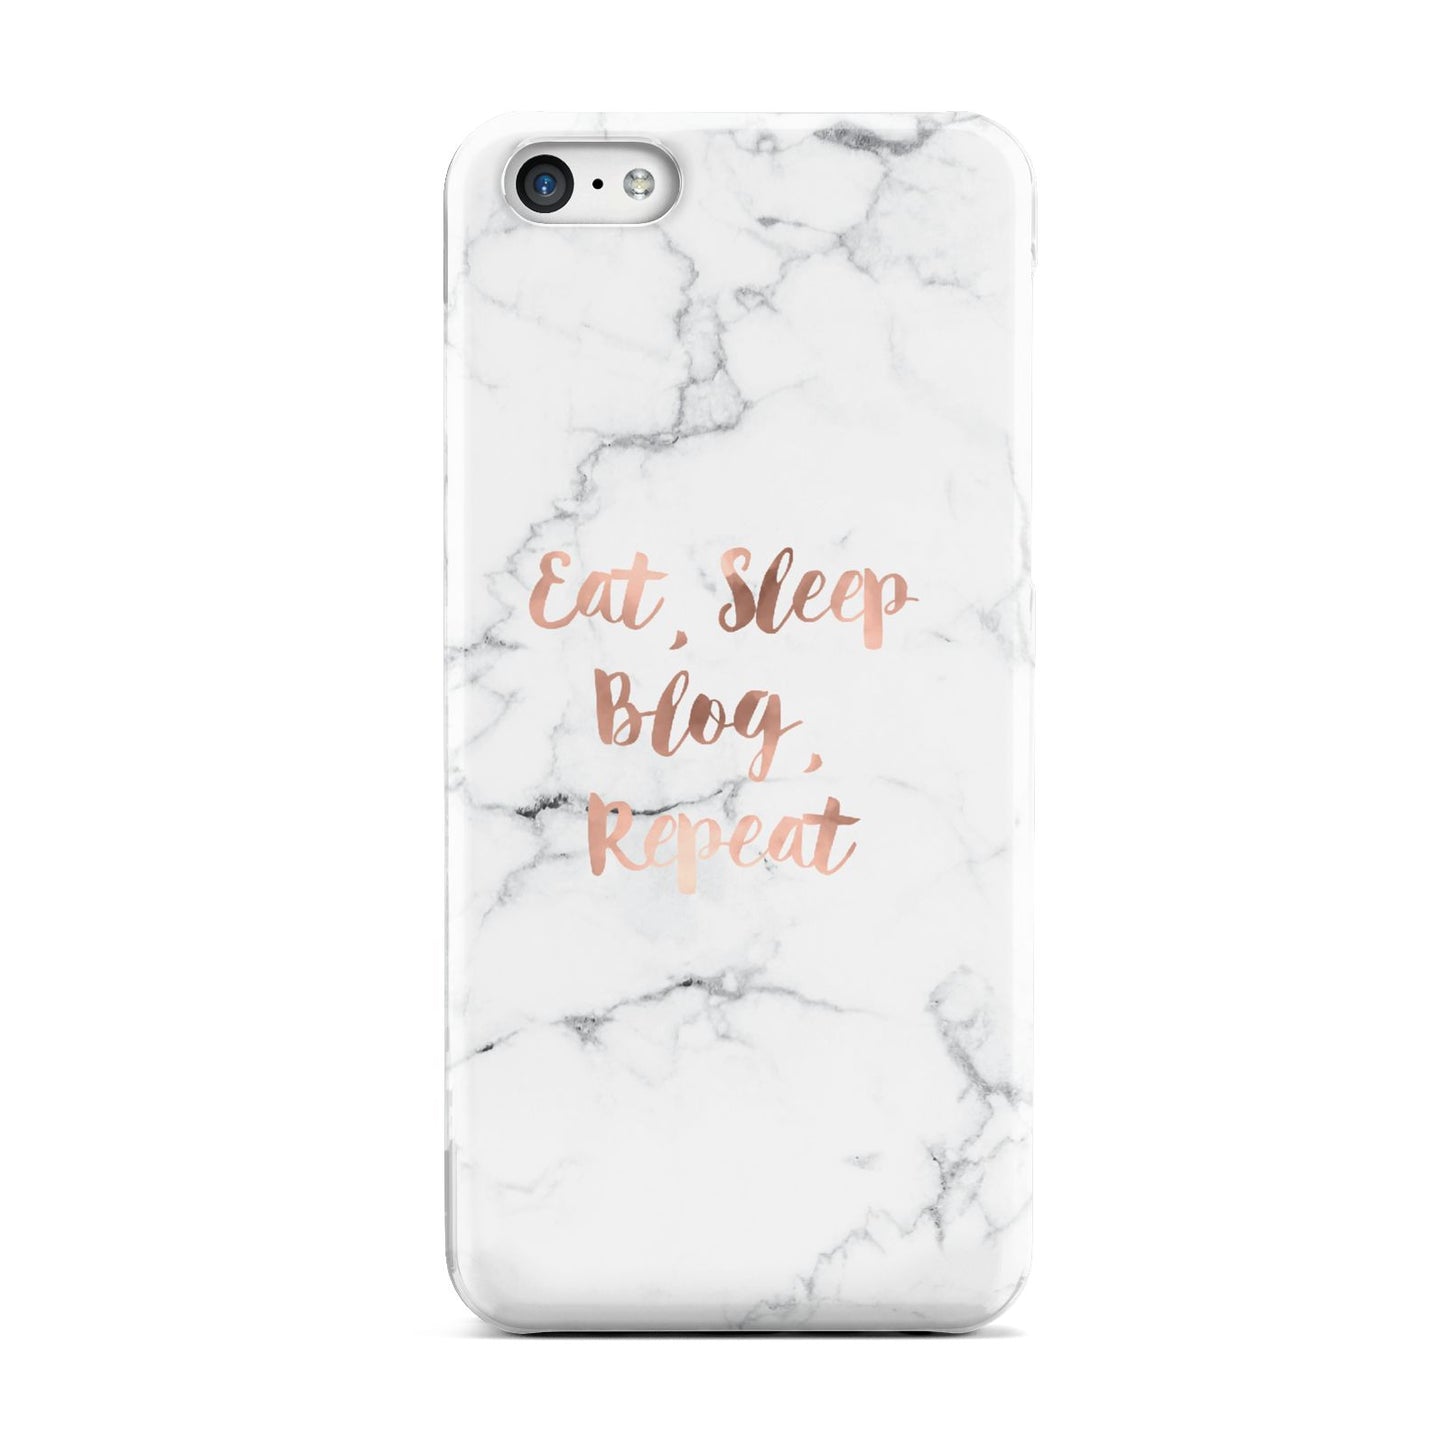 Eat Sleep Blog Repeat Marble Effect Apple iPhone 5c Case